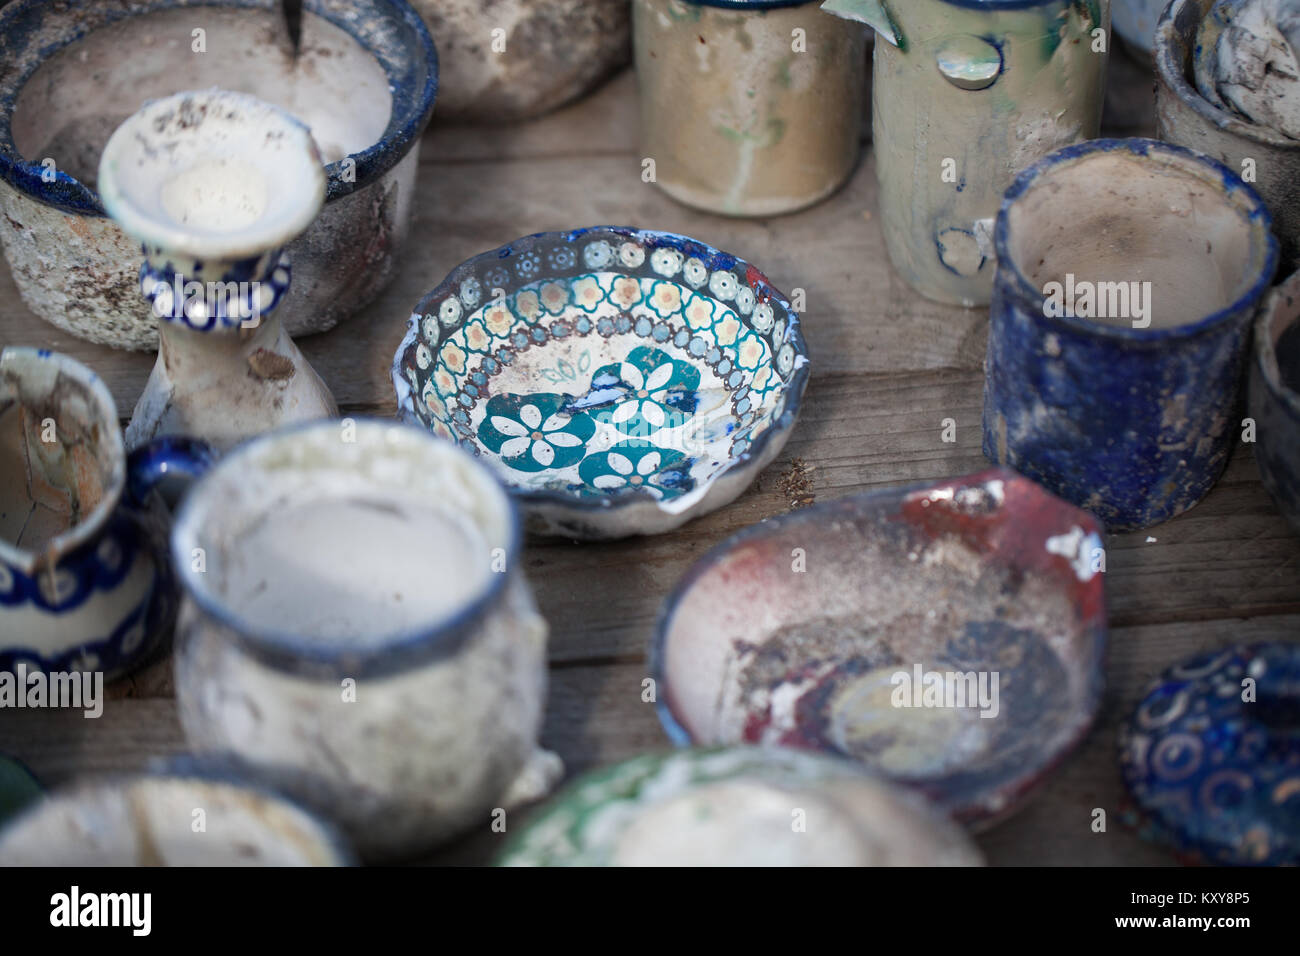 Boleslawiec ceramics - destroyed ceramics - art Stock Photo